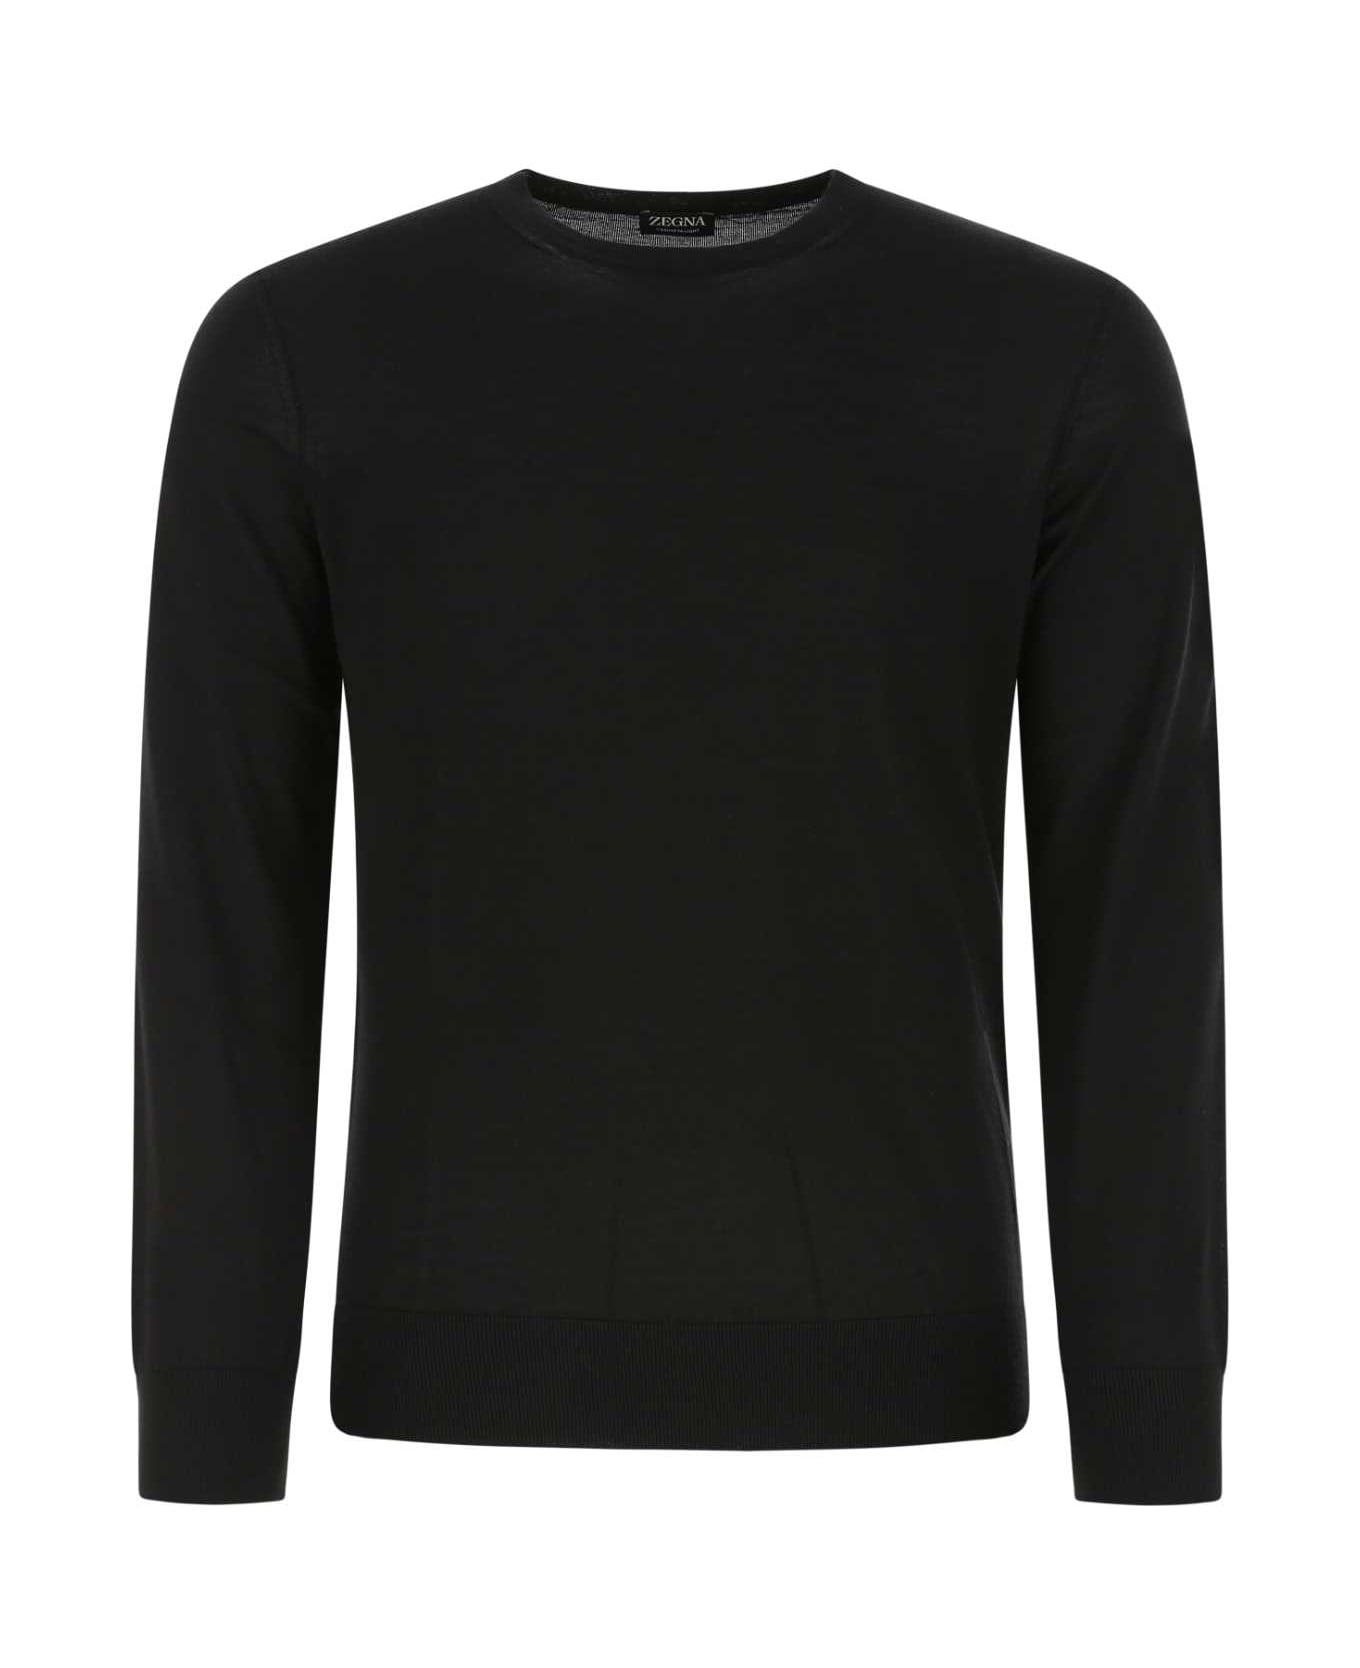 Zegna Black Cashmere Blend Sweater - K09